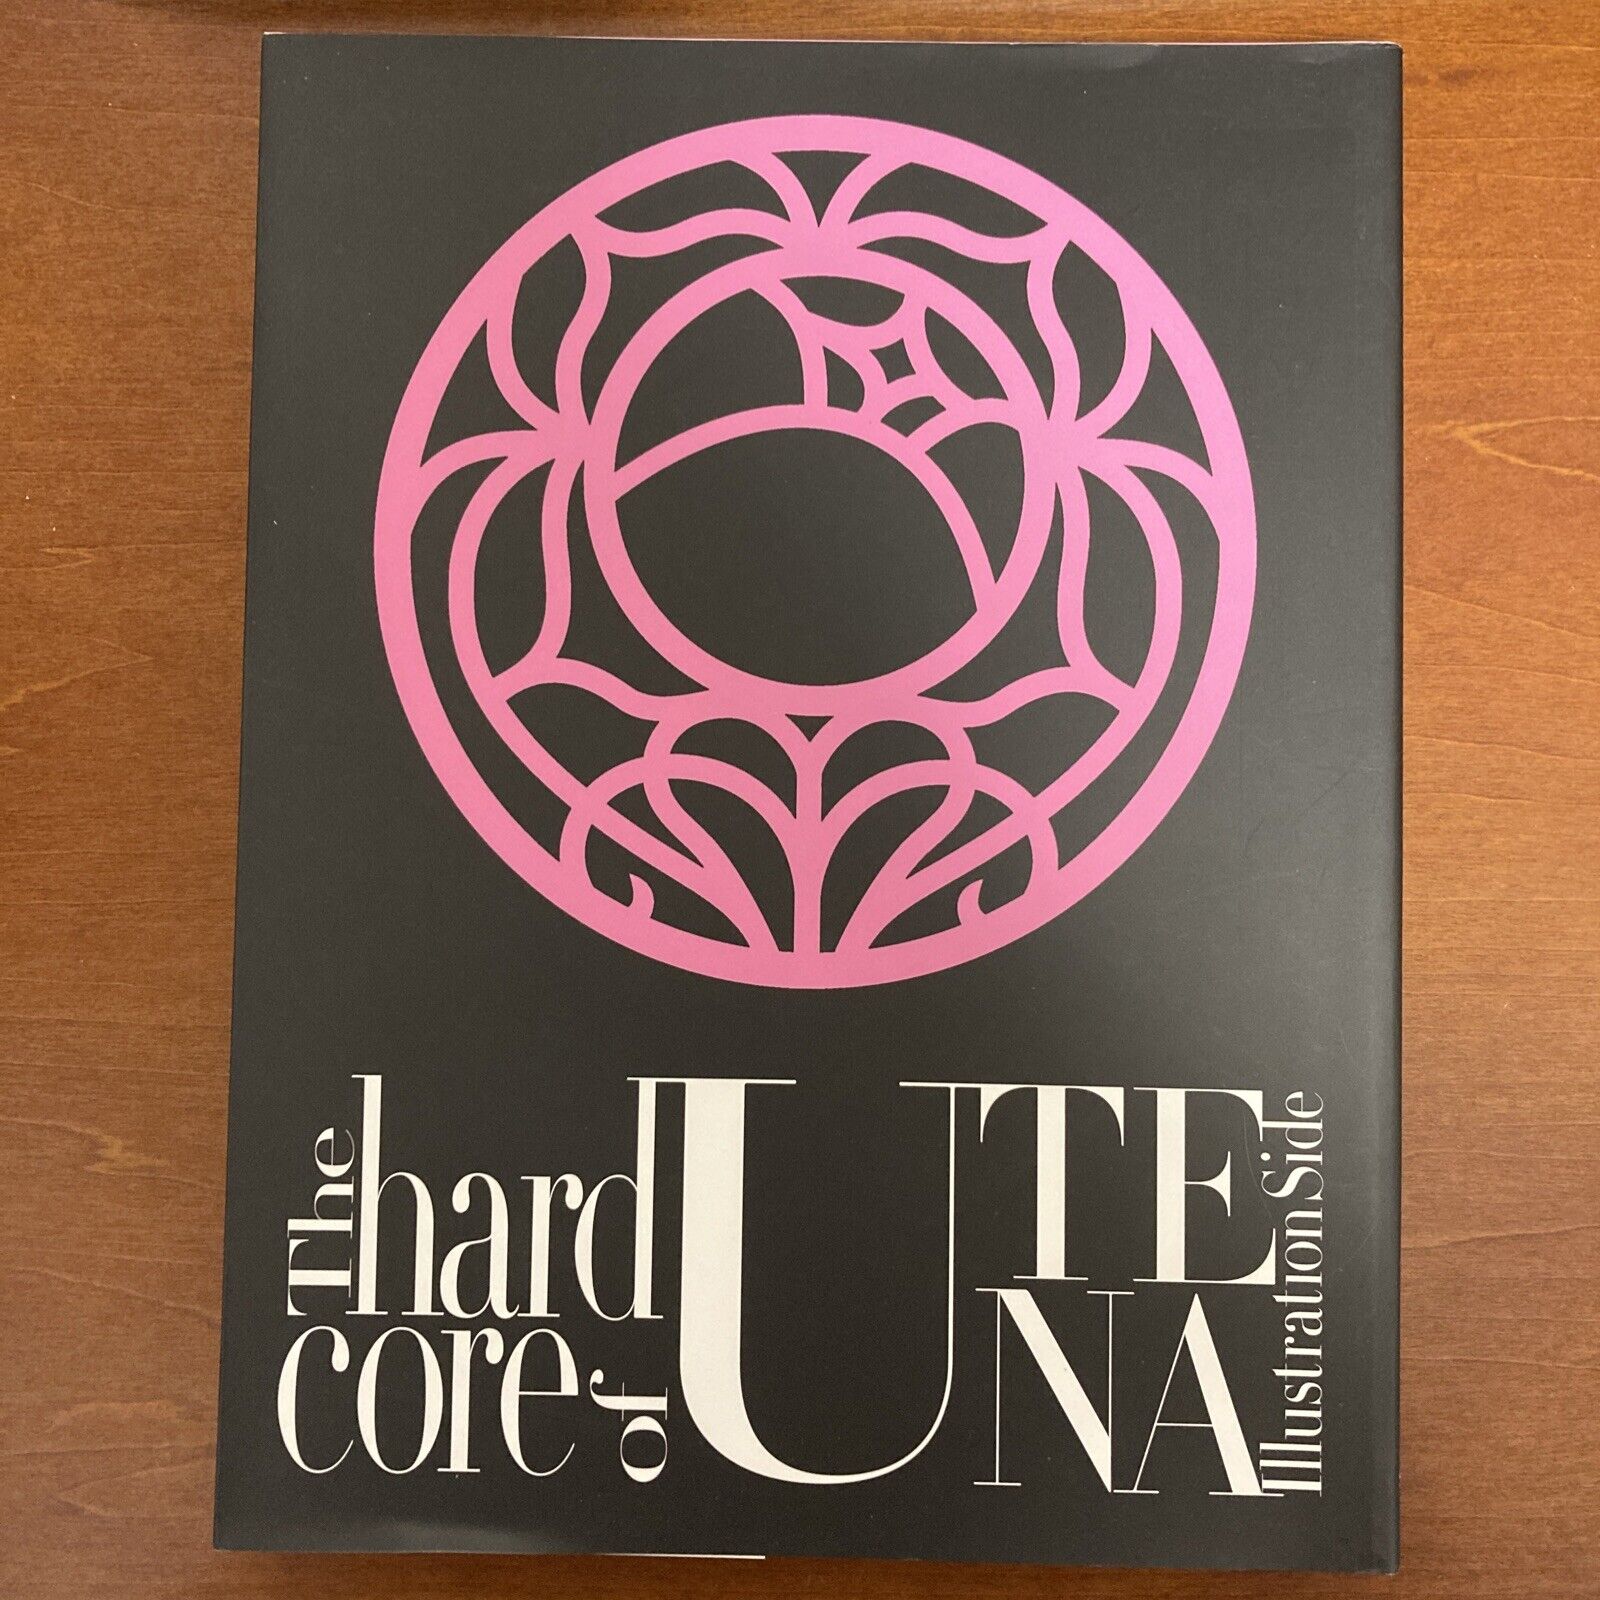 Revolutionary Girl Utena Art Book The hard core of UTENA Illustration Side